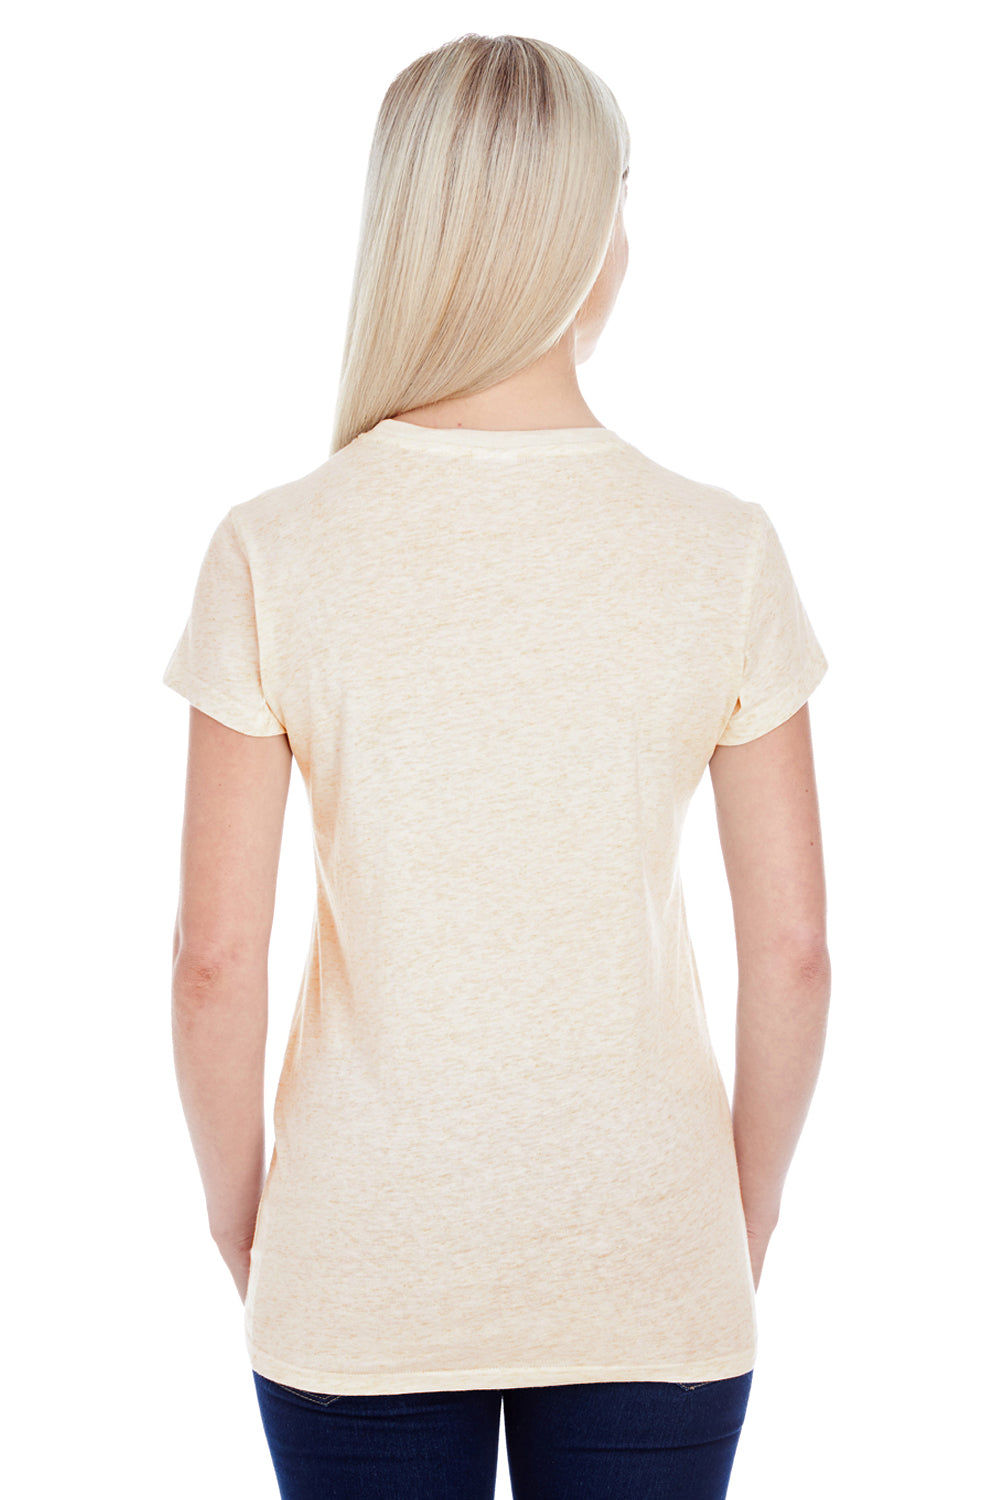 J America JA8138 Womens Glitter Short Sleeve Crewneck T-Shirt White Back